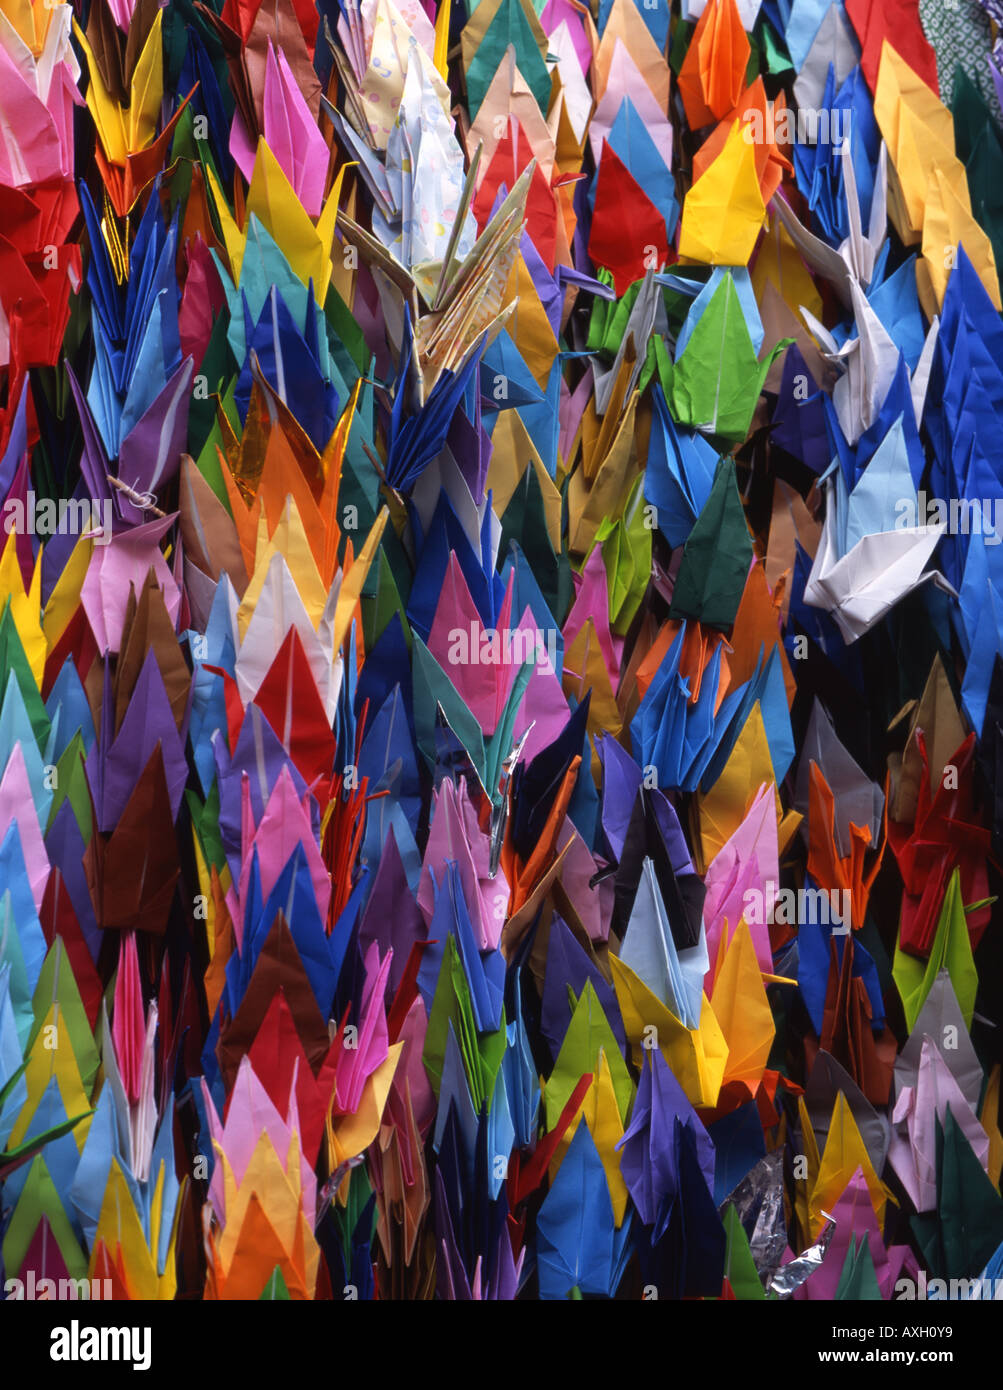 Senbazuru, a thousand paper origami cranes. Hanging at the Childrens's Peace Monument, Hiroshima, Japan. Stock Photo